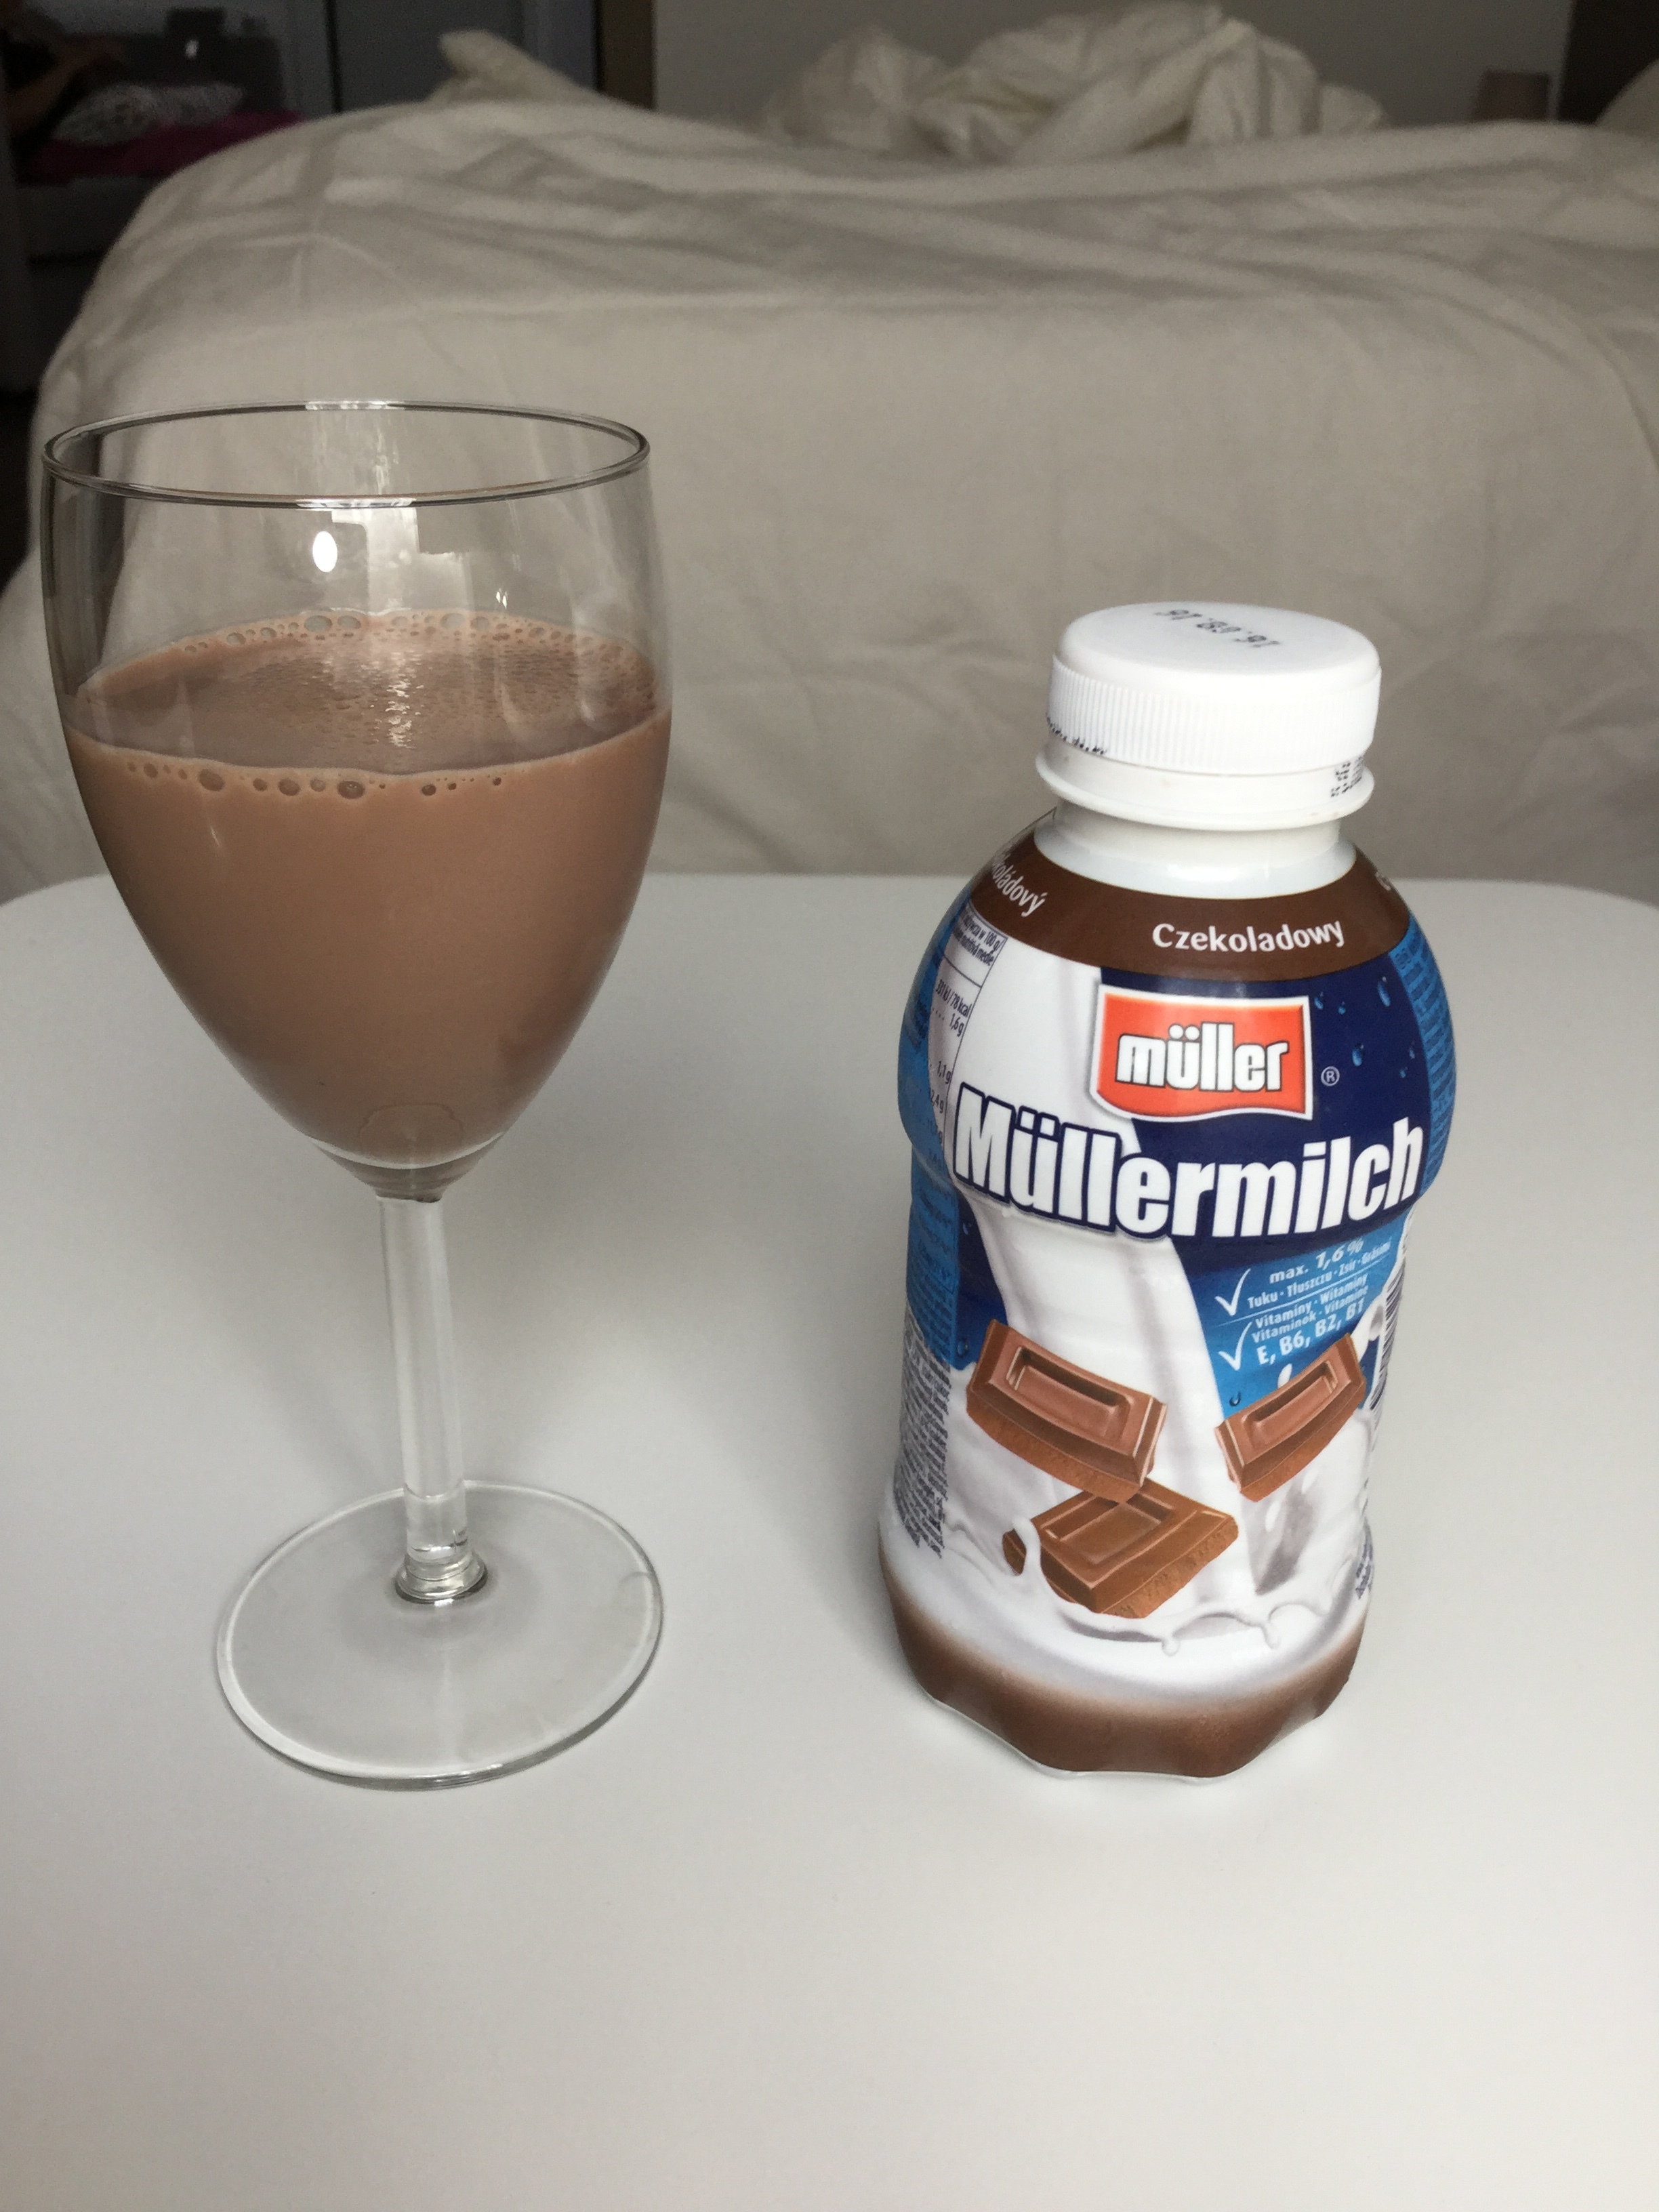 Müller Müllermilch Ciocolata — Chocolate Milk Reviews